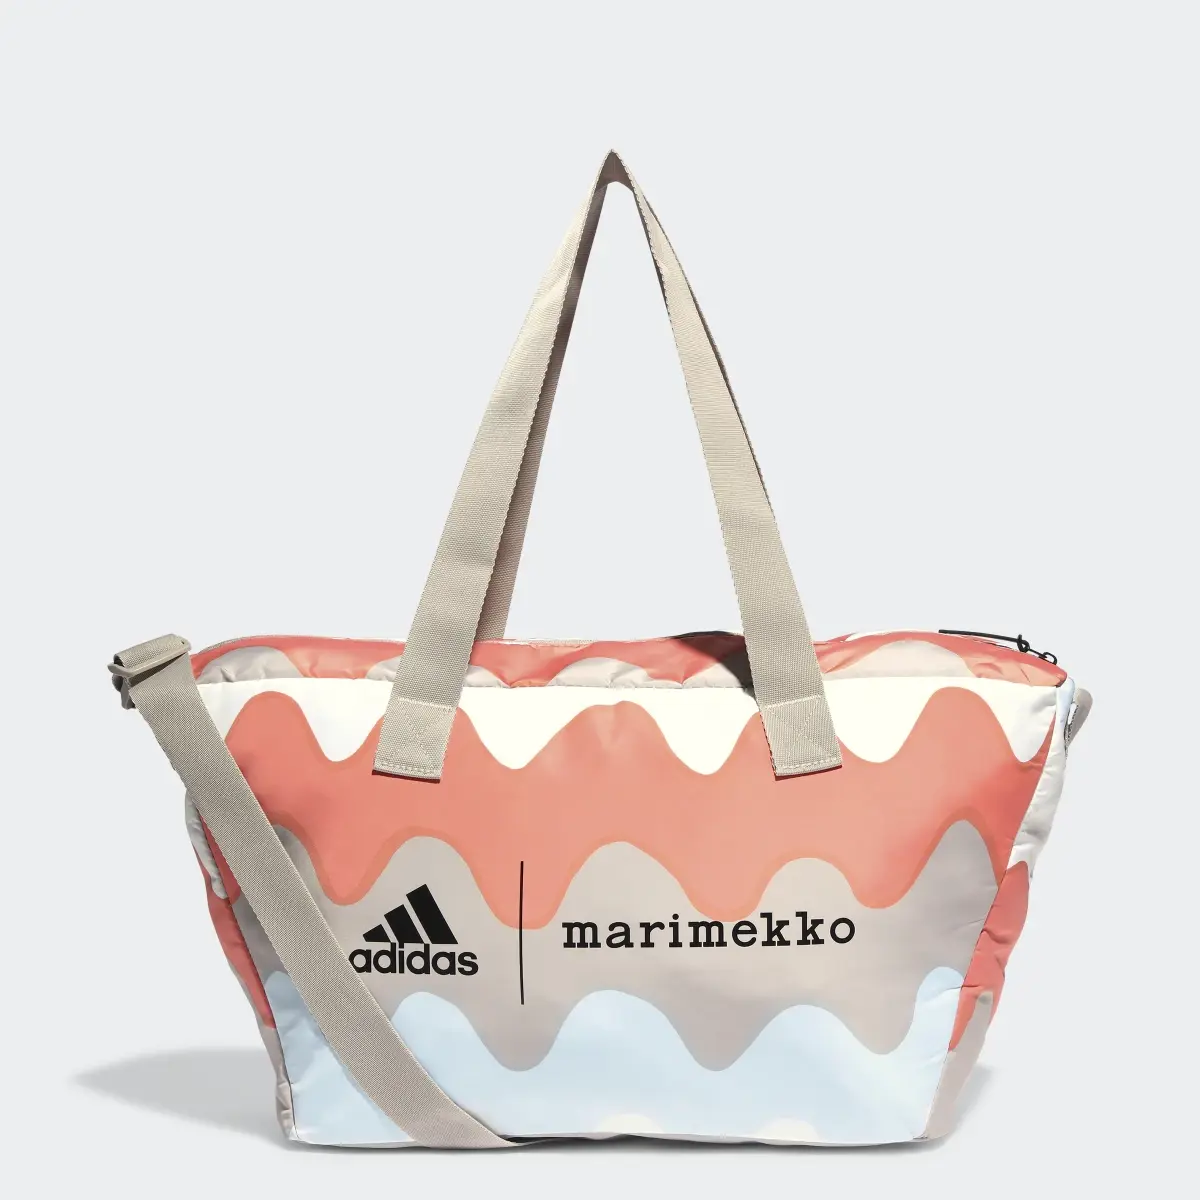 Adidas x Marimekko Shopper Designed 2 Move Trainingstasche. 1